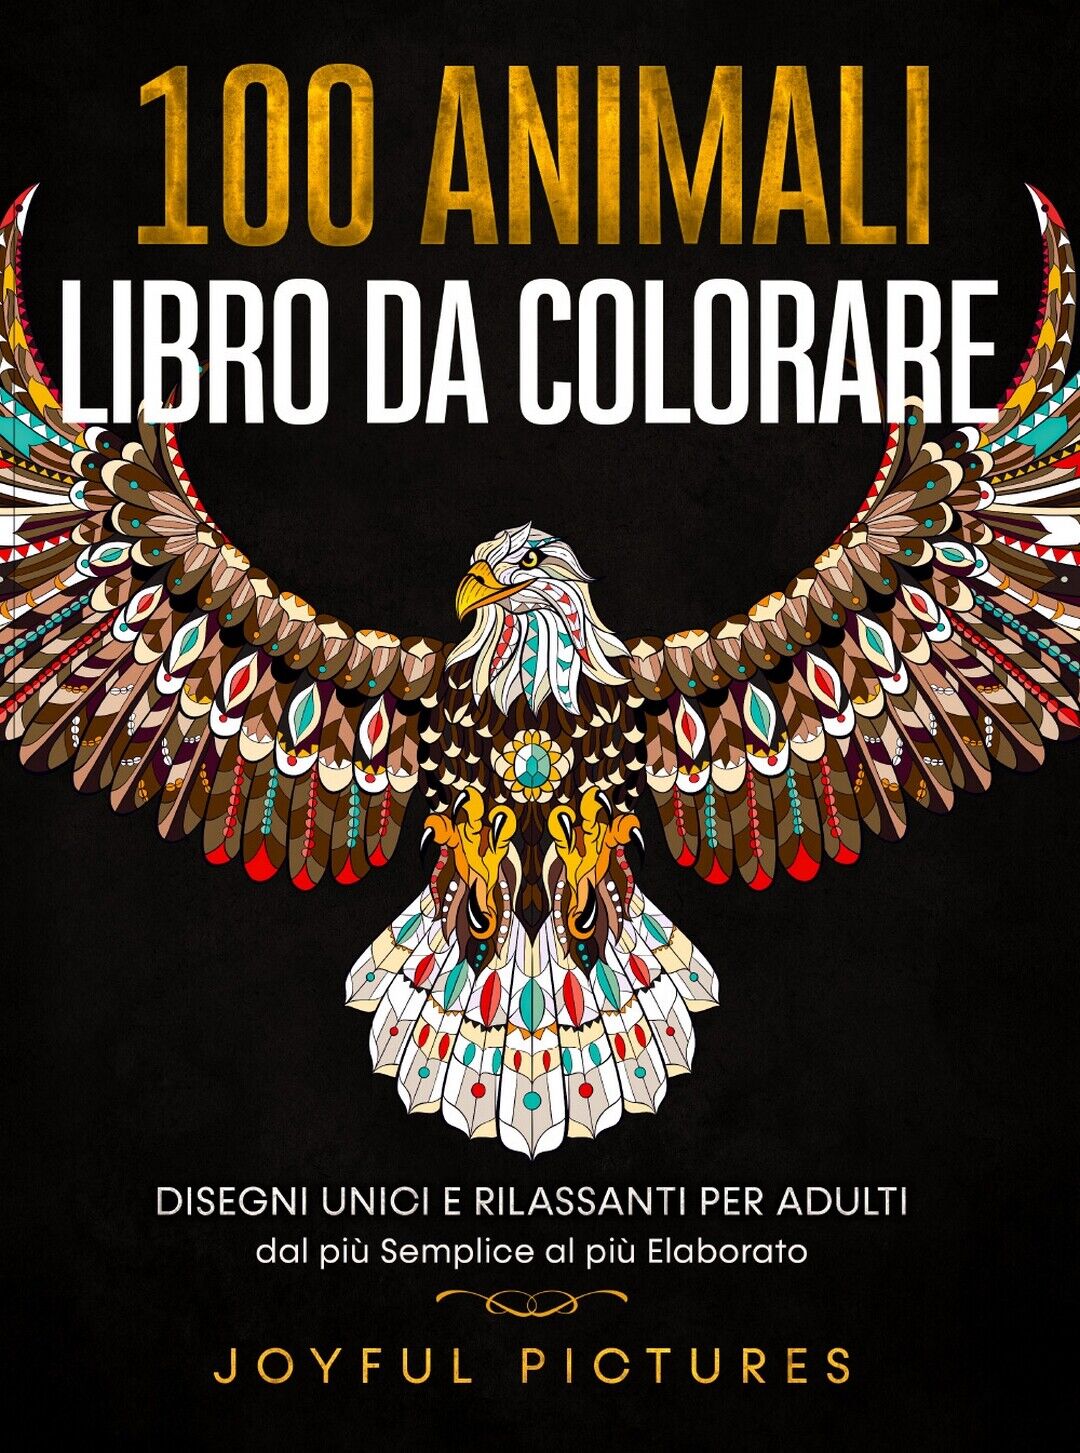 100 Animali - Libro da Colorare, Joyful Pictures (autore),  2021,  Youcanprint